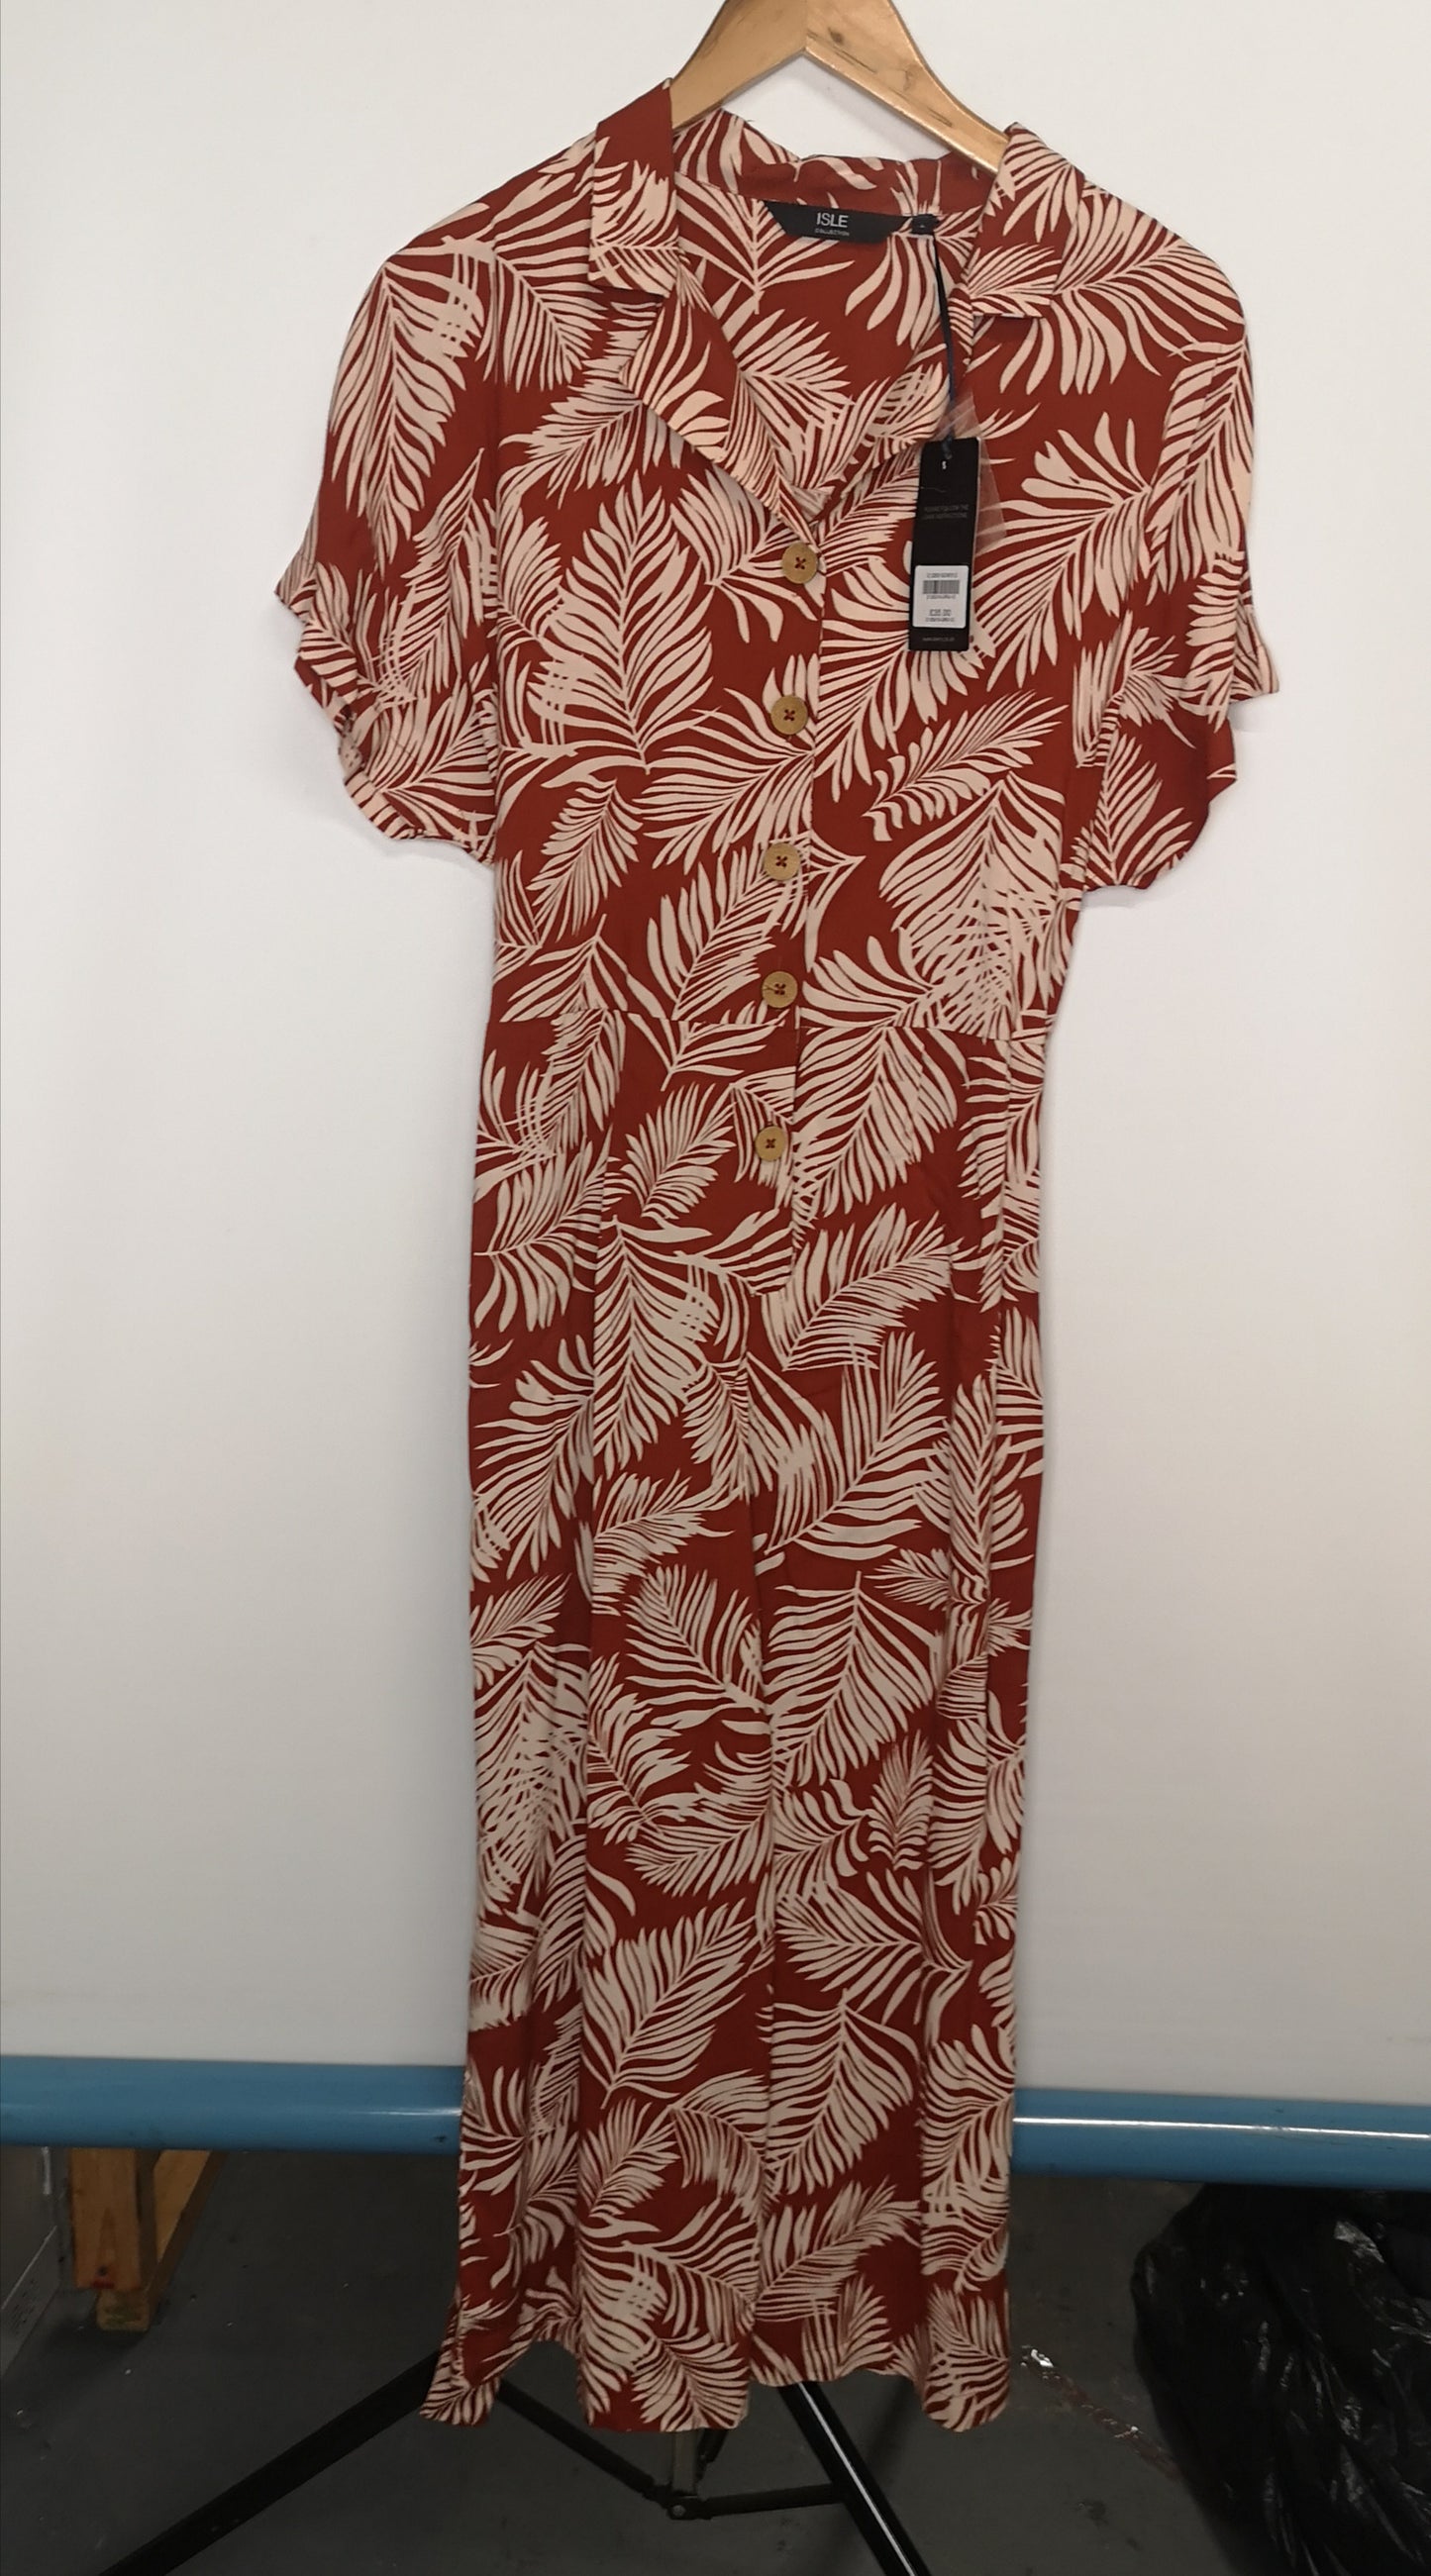 BNWT Isle Collection Orange Leaf Print Dress Size 12